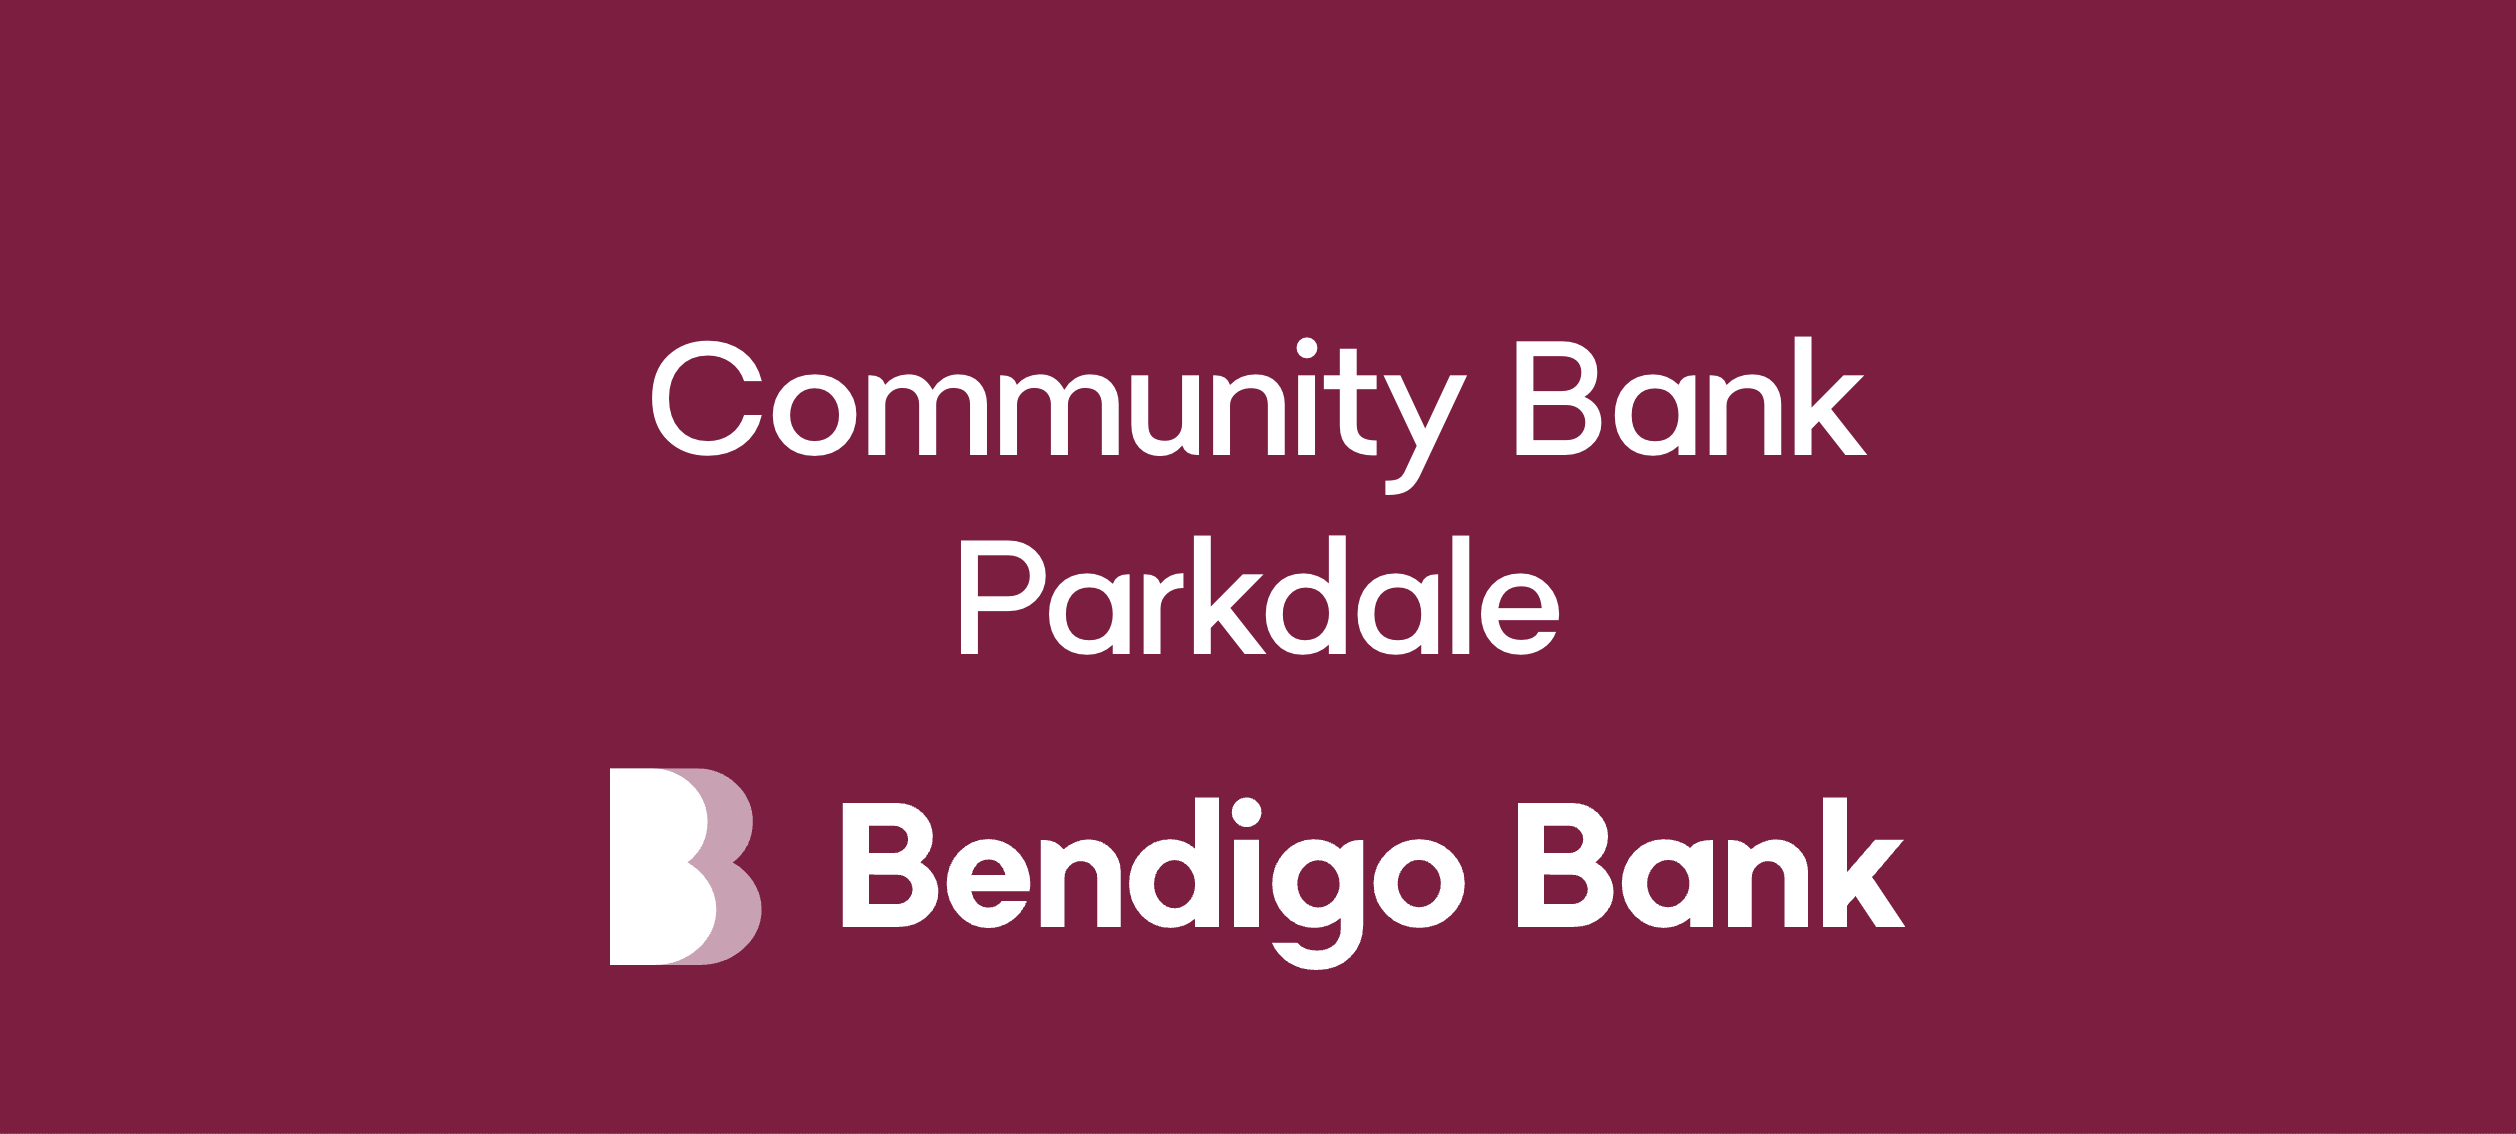 Bendigo Bank – Parkdale